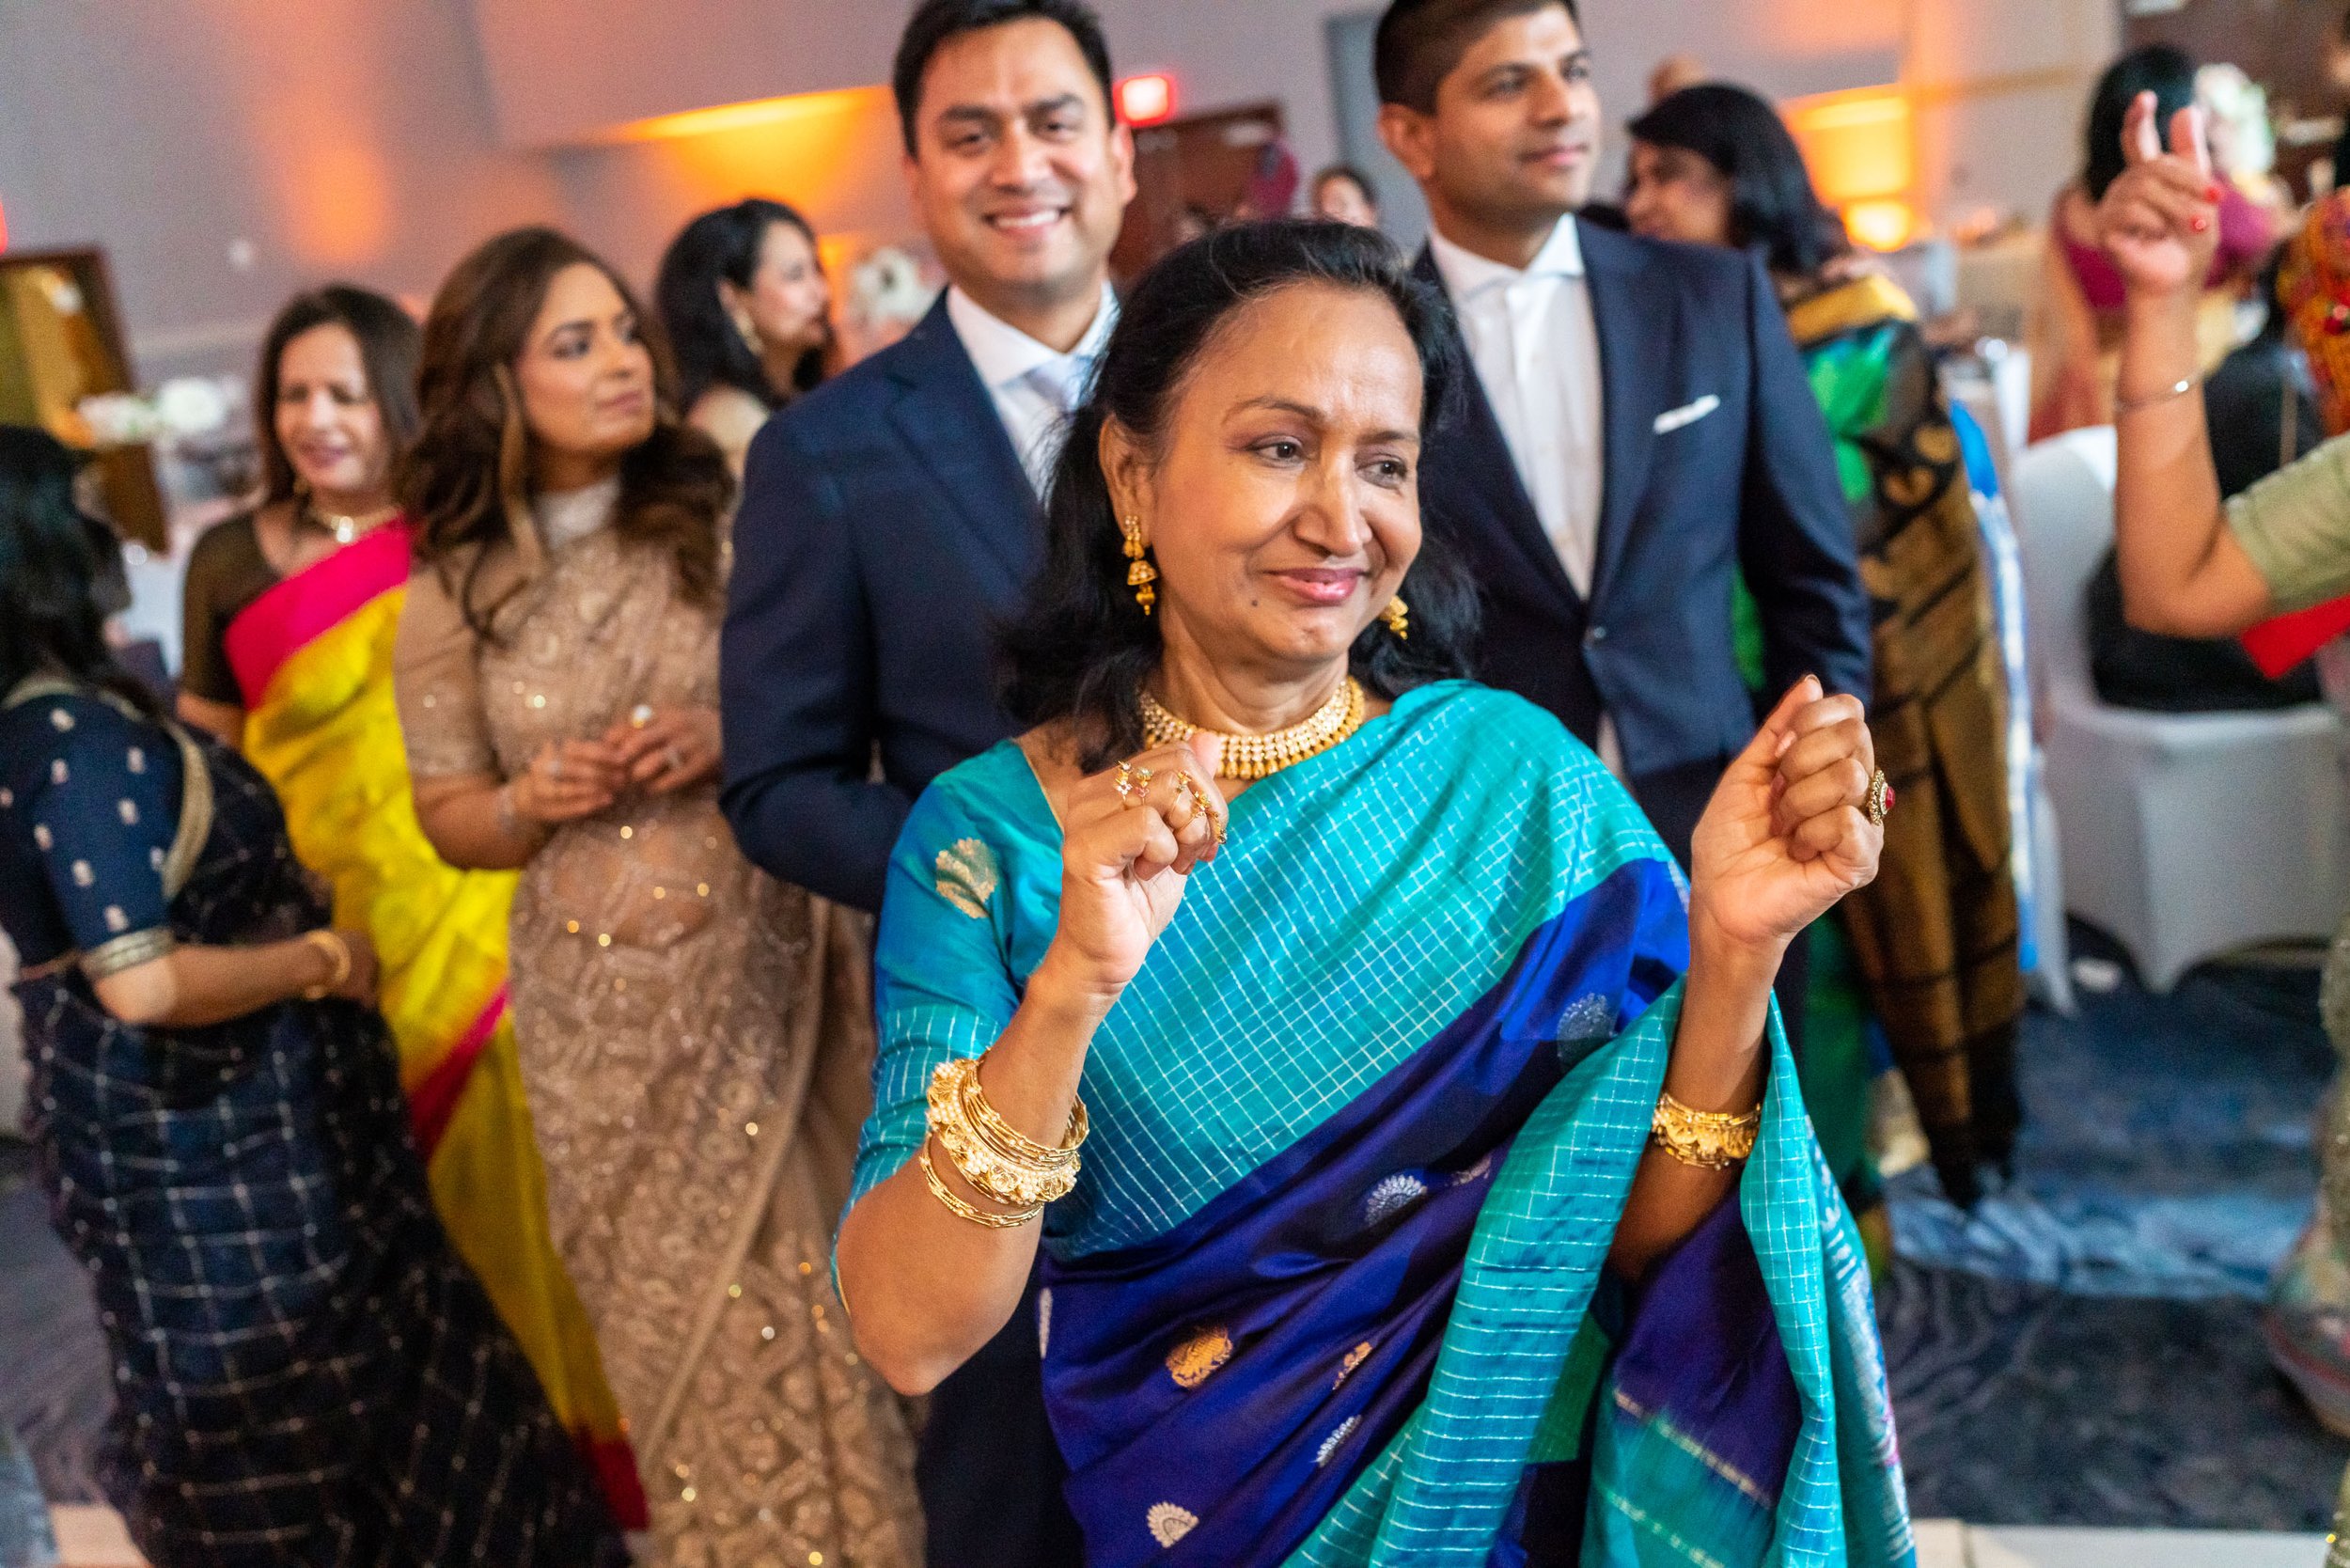 indian wedding dance floor photos from wedding reception at Hyatt Dulles